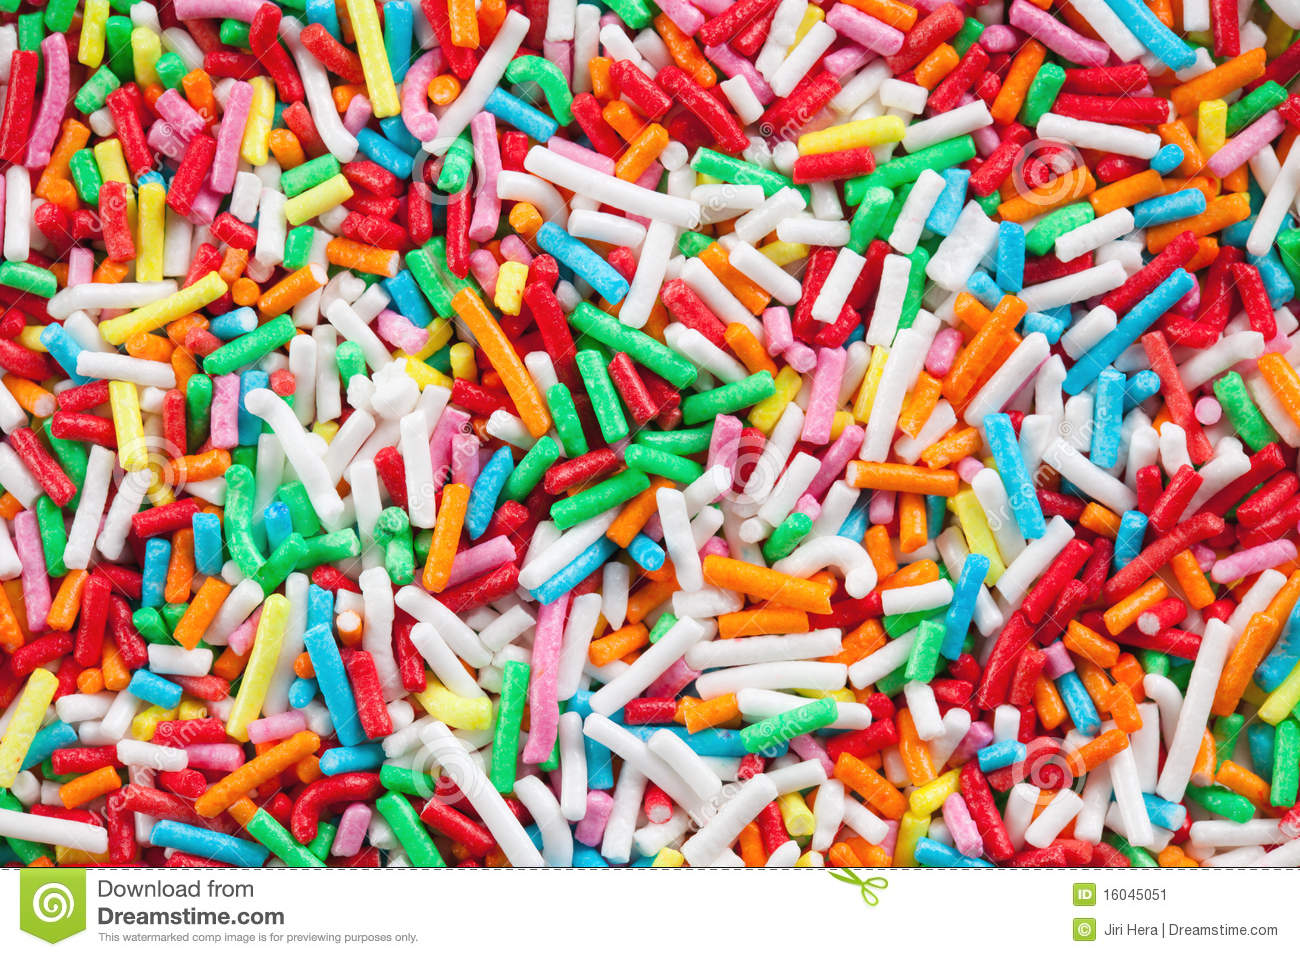 Colorful Sugar Sprinkles Stock Image   Image  16045051